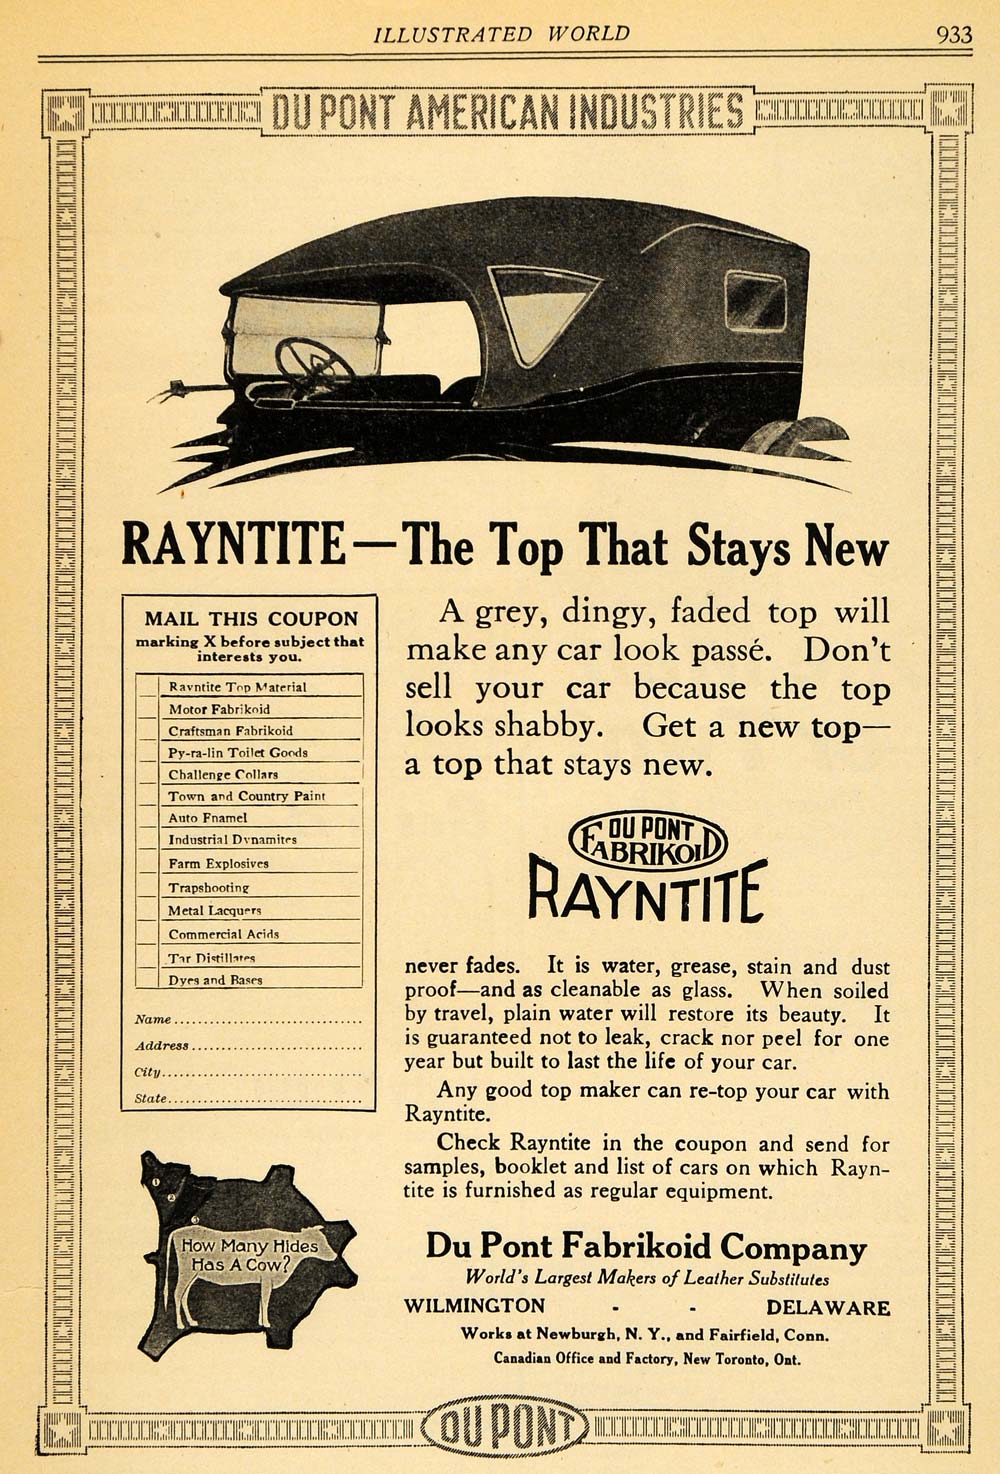 1918 Ad Du Pont Fabrikoid Rayntite Antique Car Top - ORIGINAL ADVERTISING ILW1